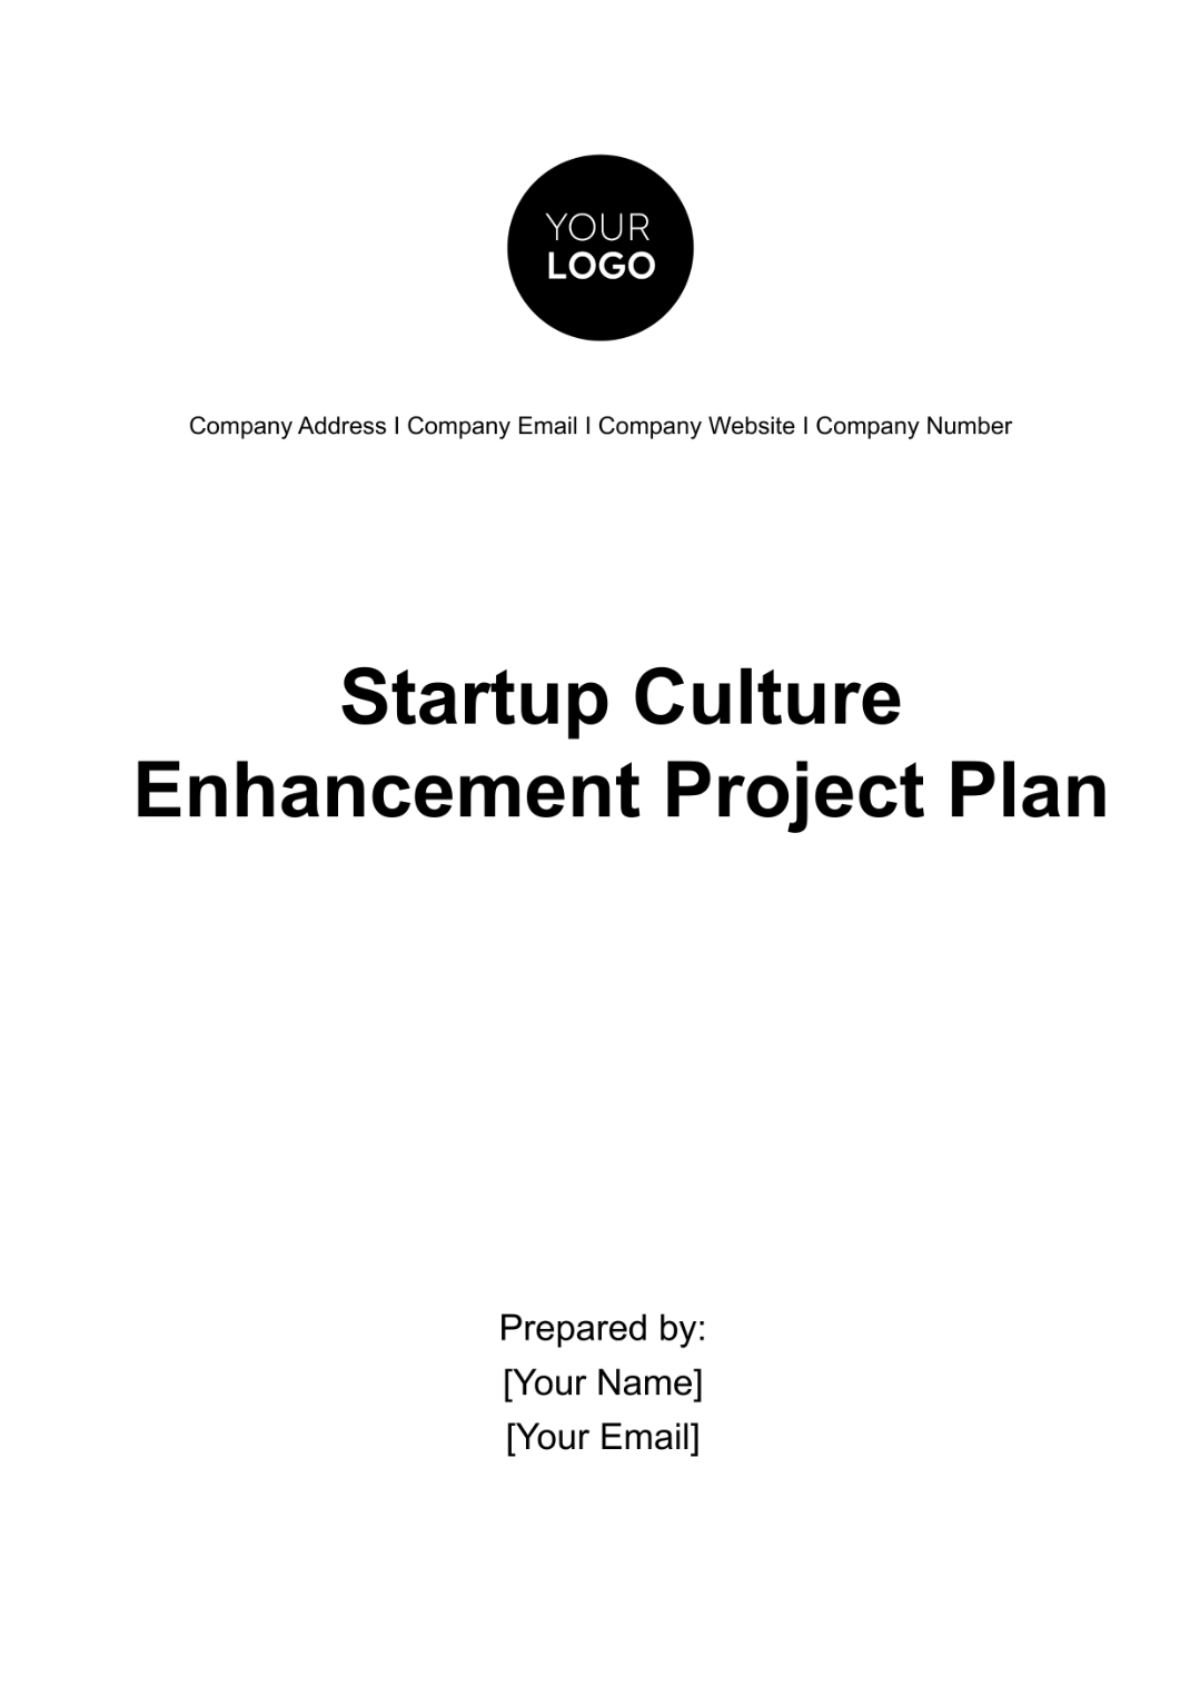 Startup Culture Enhancement Project Plan Template